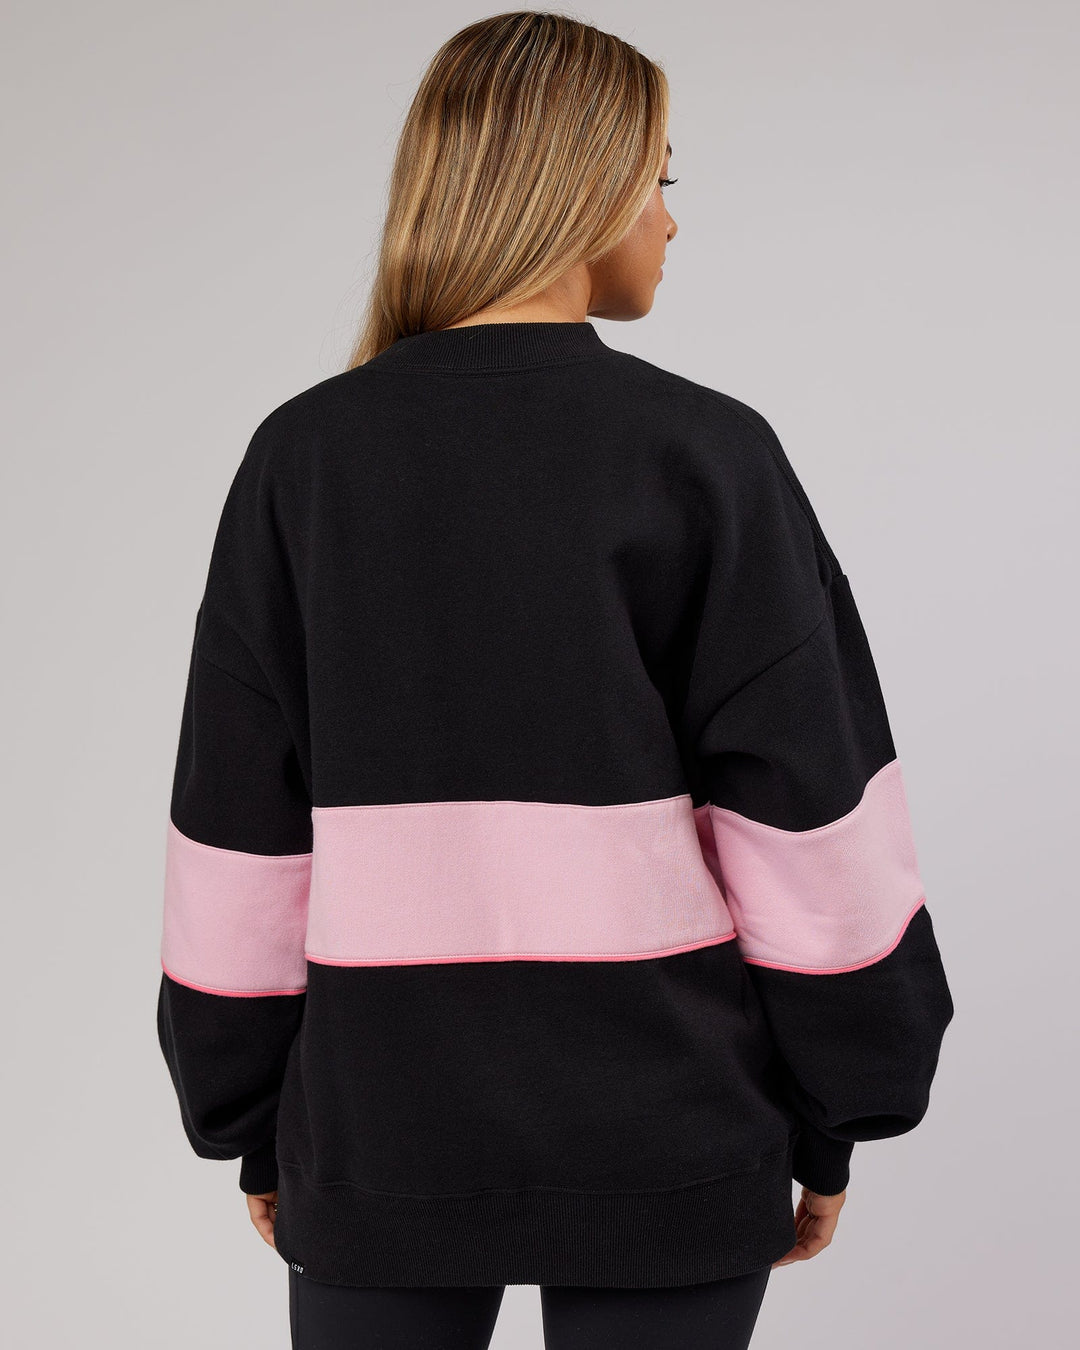 Woman wearing Unisex Extra Time Sweater Oversize - Black-Petal Pink